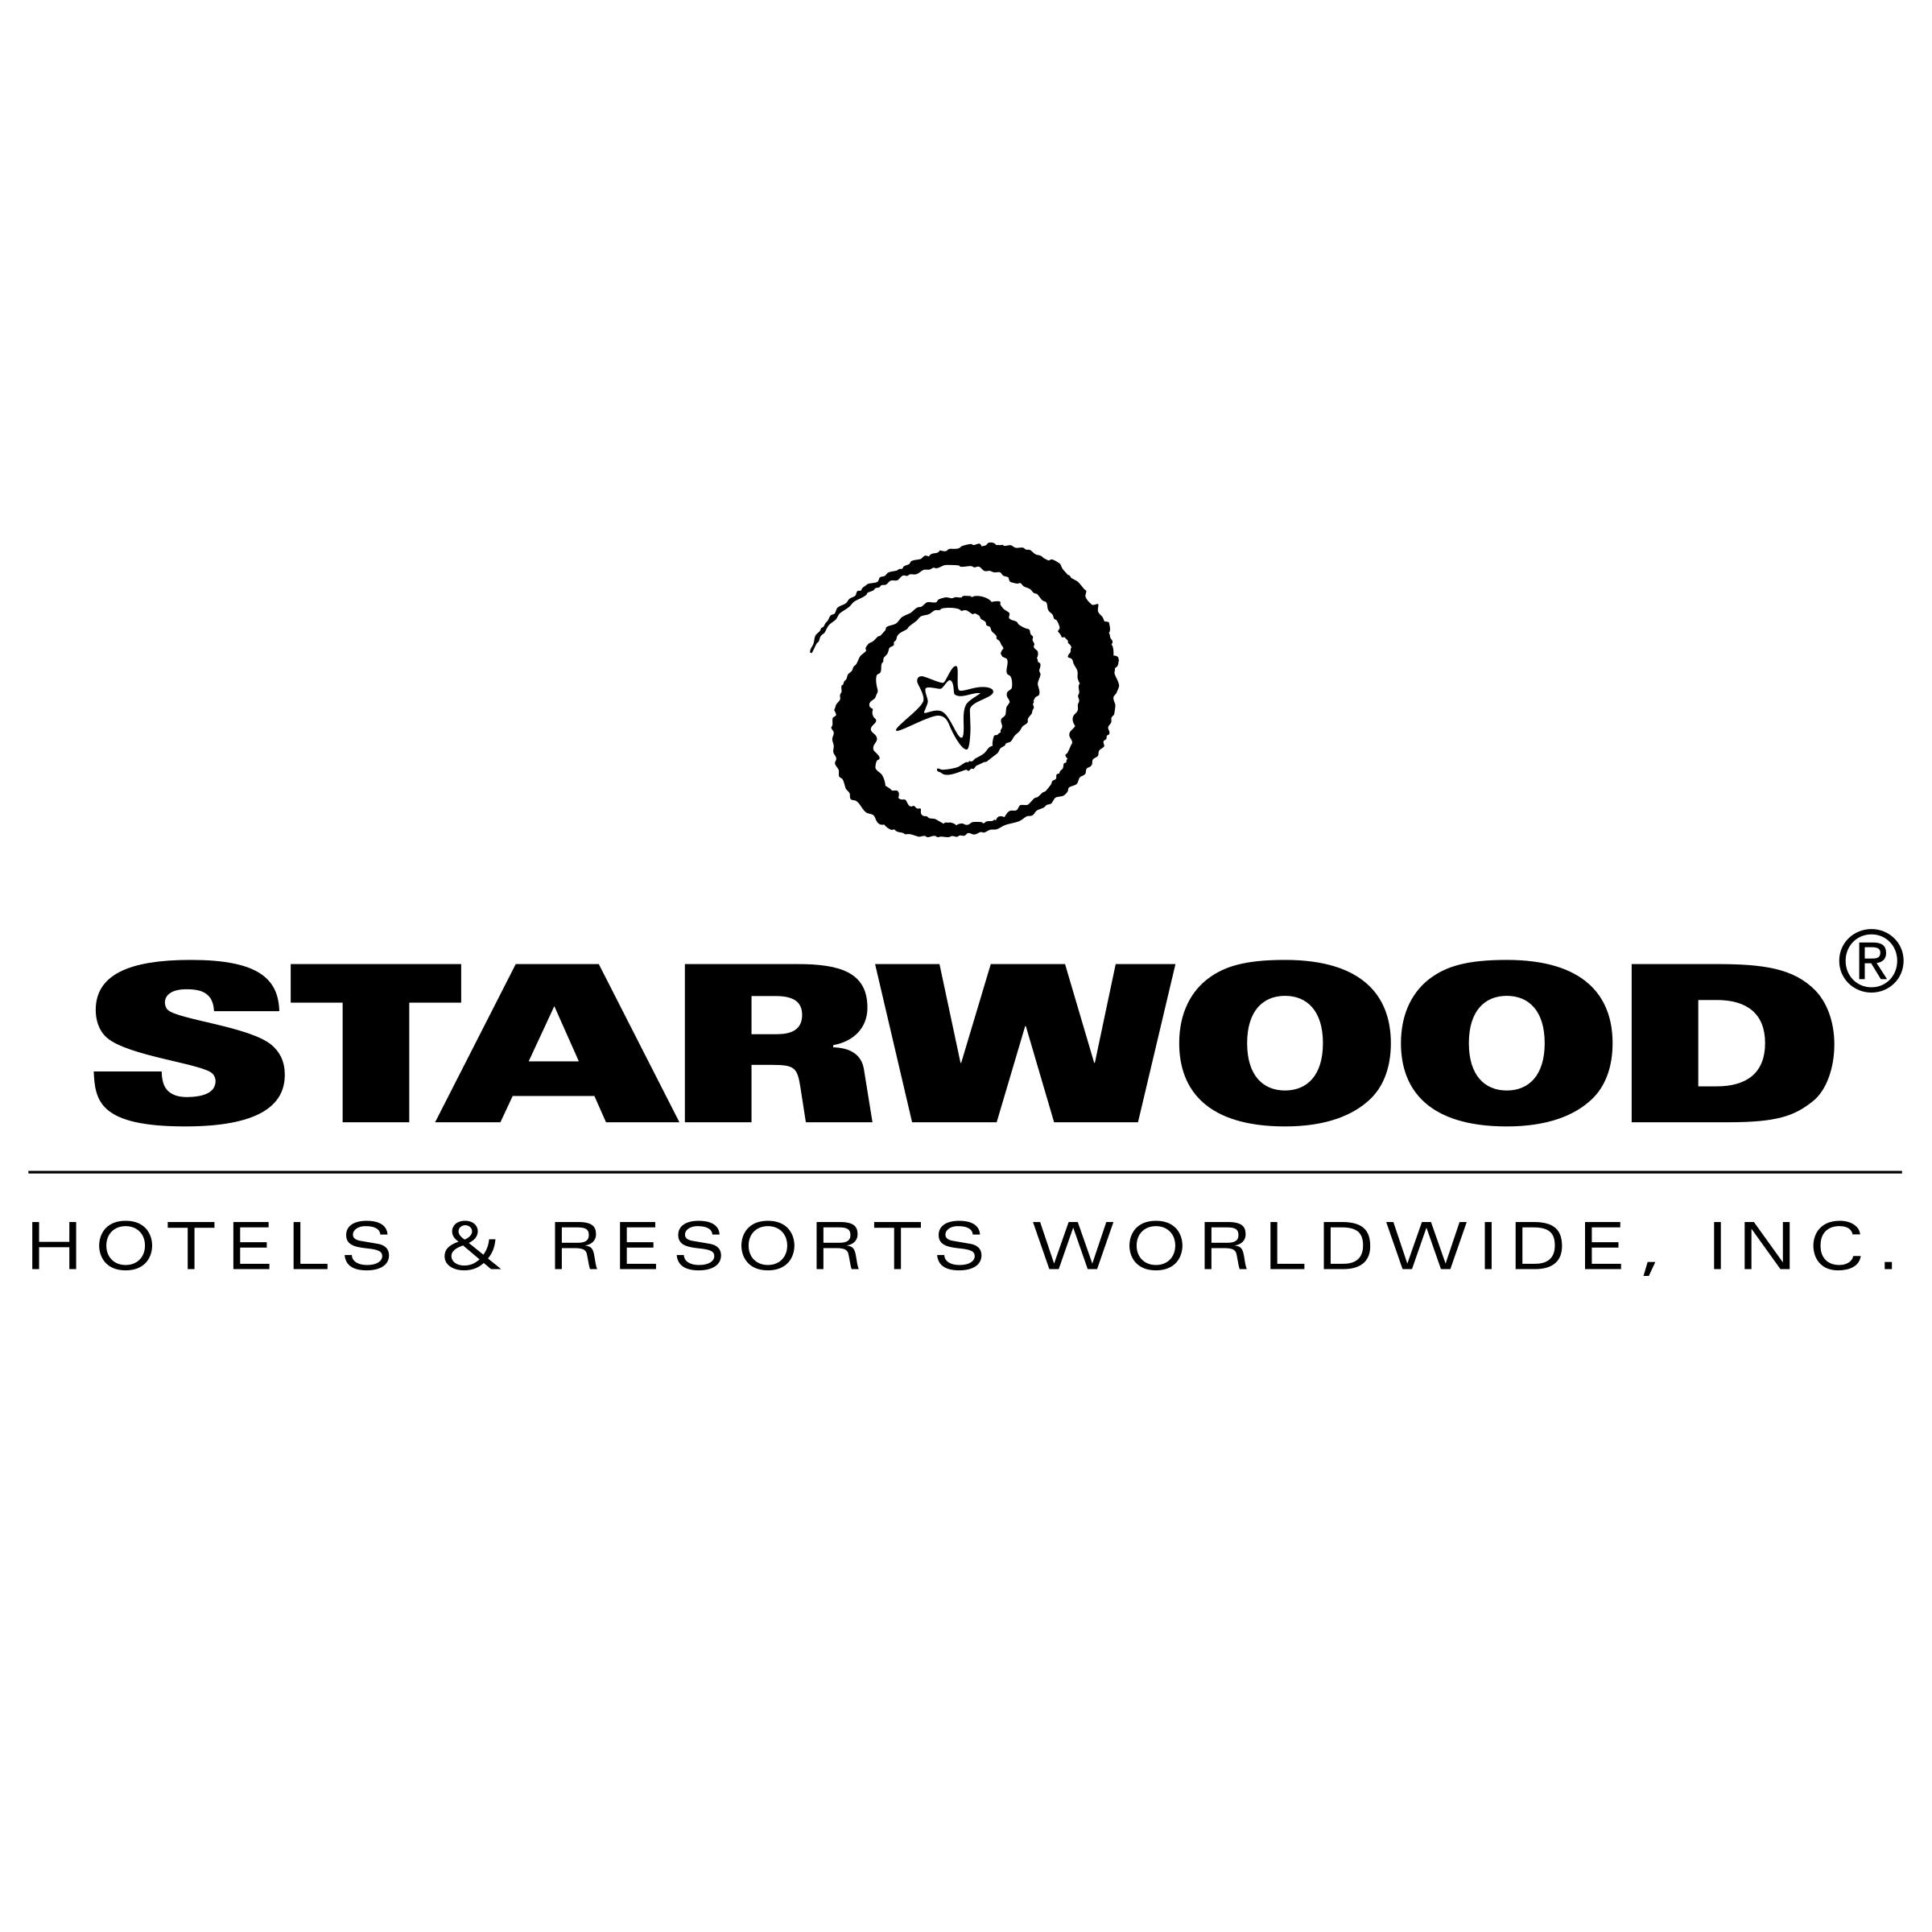 Starwood Logo - Starwood Hotels Logo PNG Transparent & SVG Vector - Freebie Supply